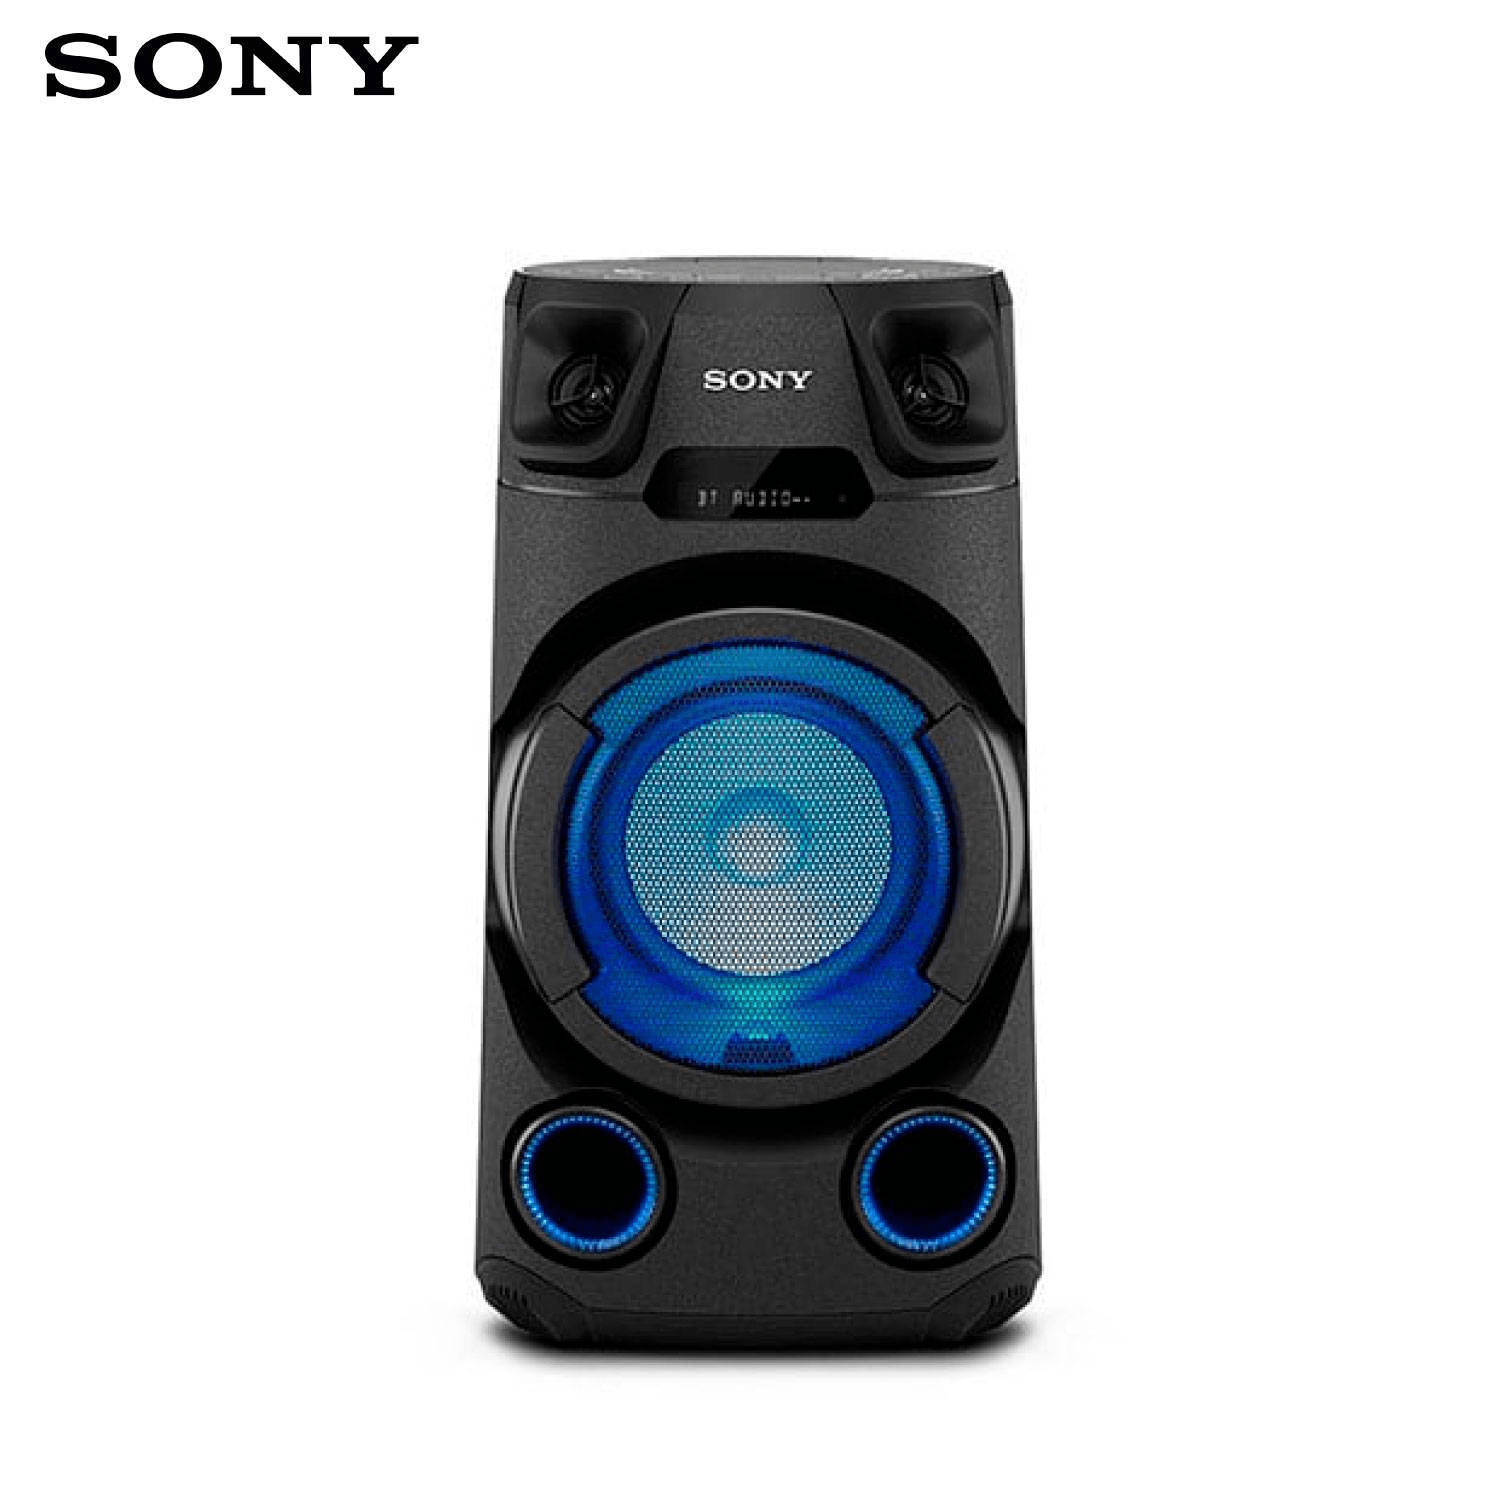 Equipo de sonido Sony MHC-V13D Bluetooth Karaoke Fiestable Negro